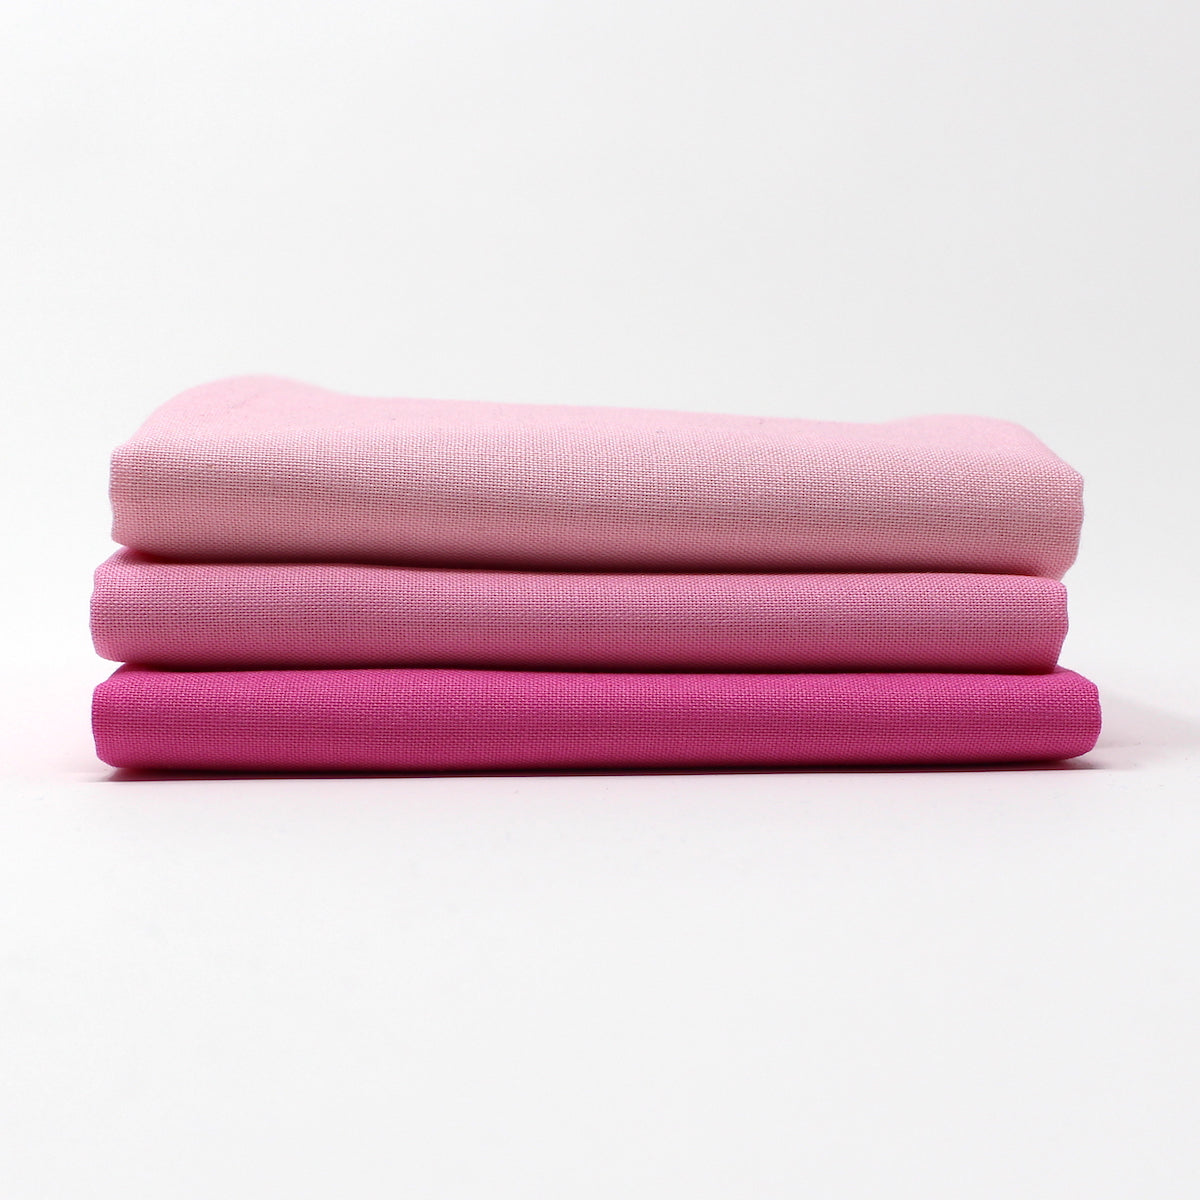 Kona Cotton - Baby Pink – Sewfinity